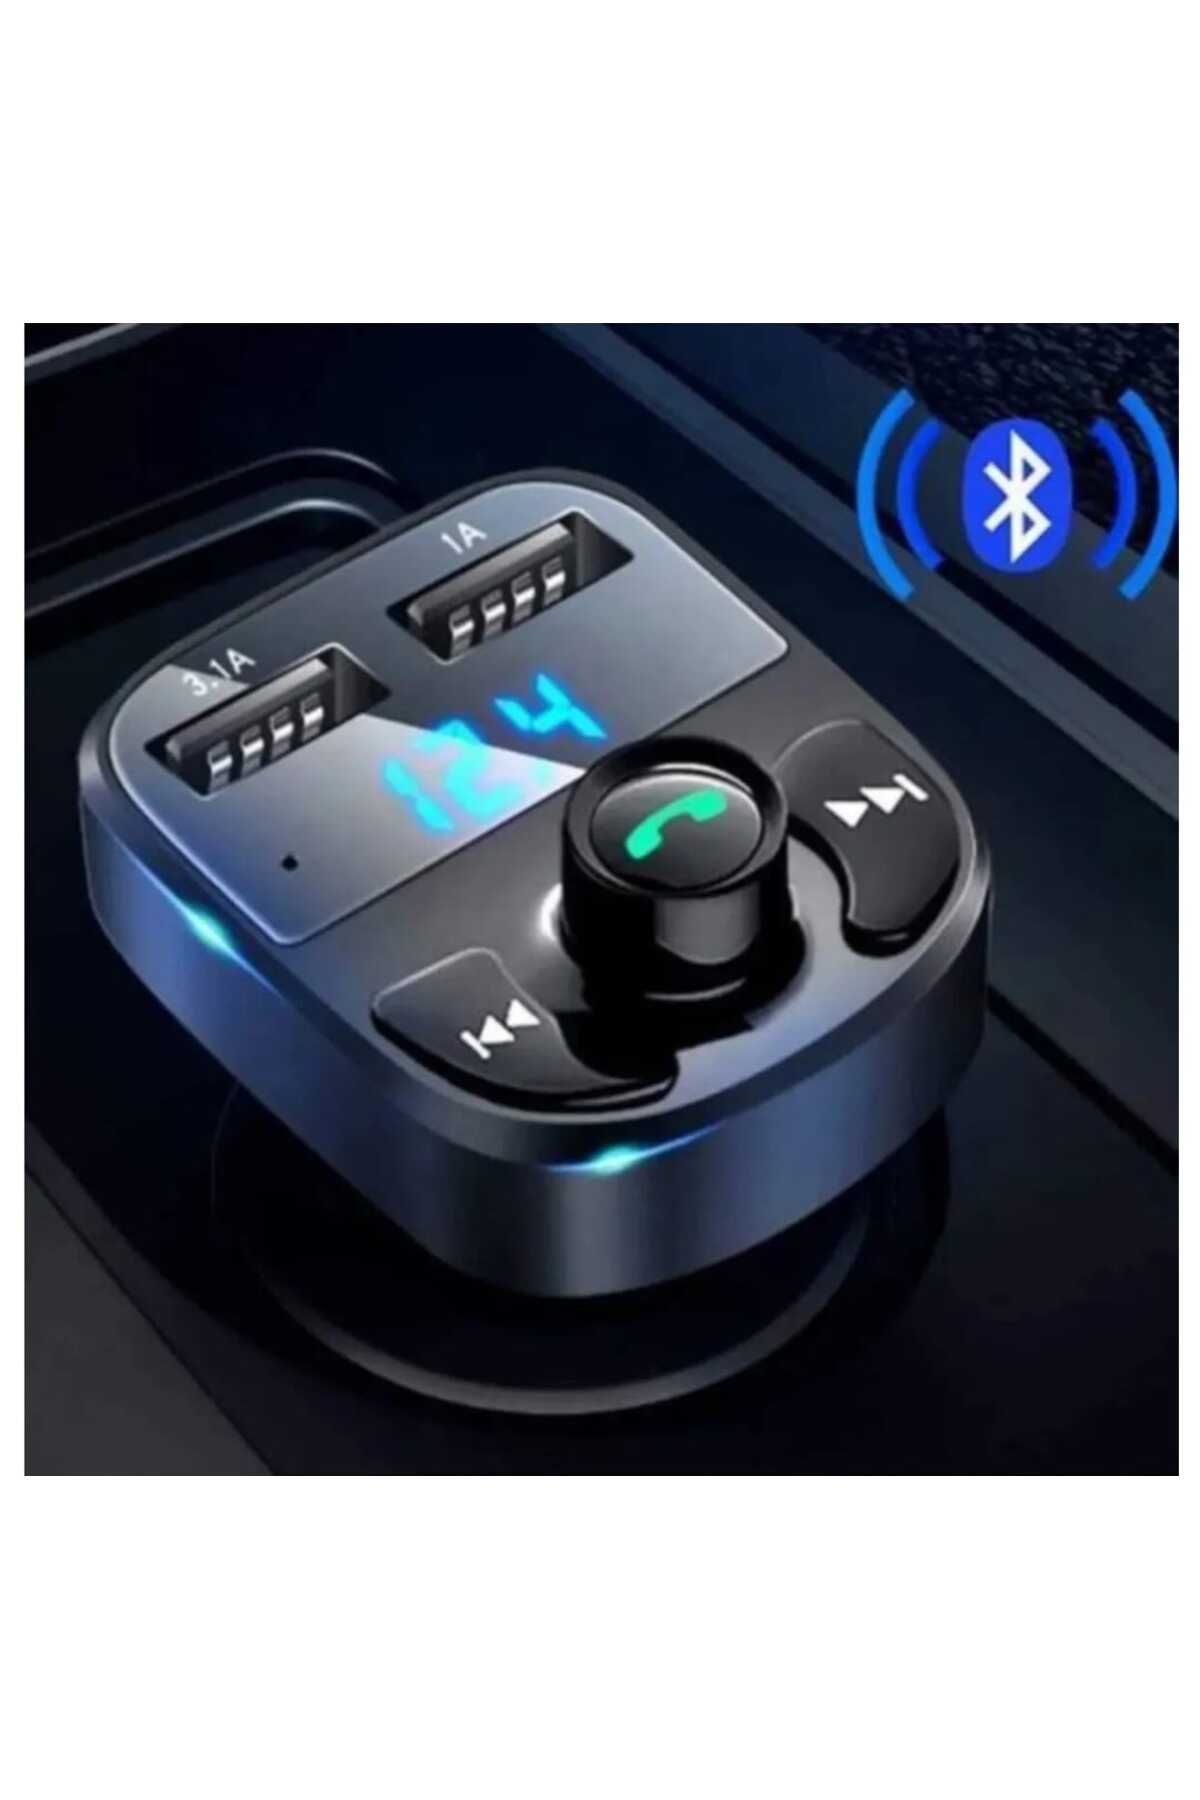 assell Carx8 Araç Usb Mp3 Sd Kart Çakmaklık Girişli Oto Müzik Çalar Kiti Bluetooth